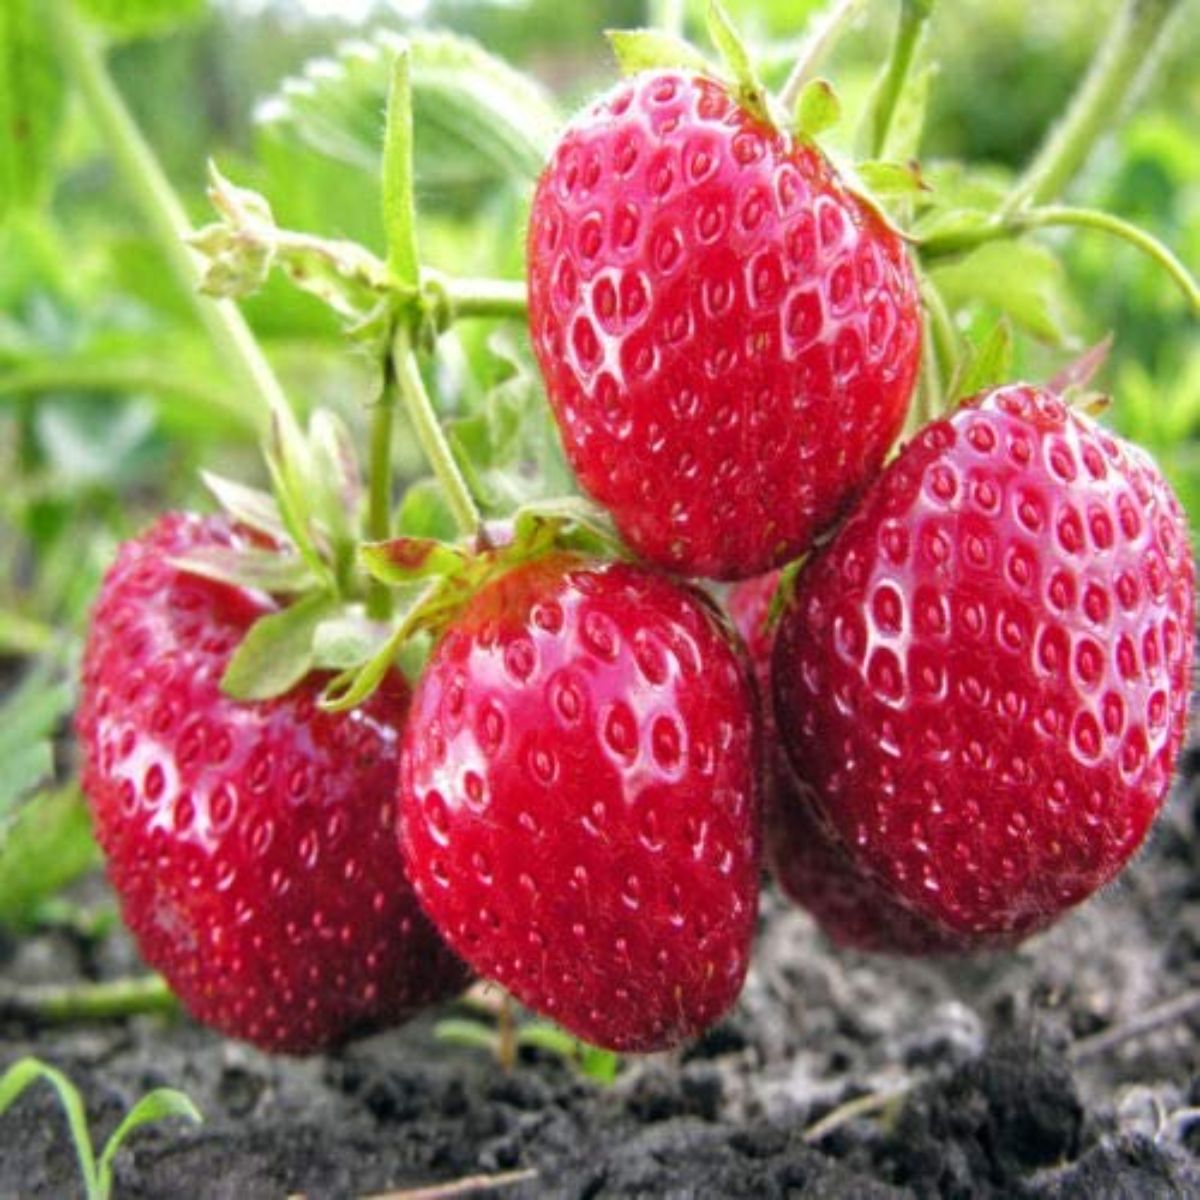 Ripe Mara Des Bois Strawberries on a stem close-up.
